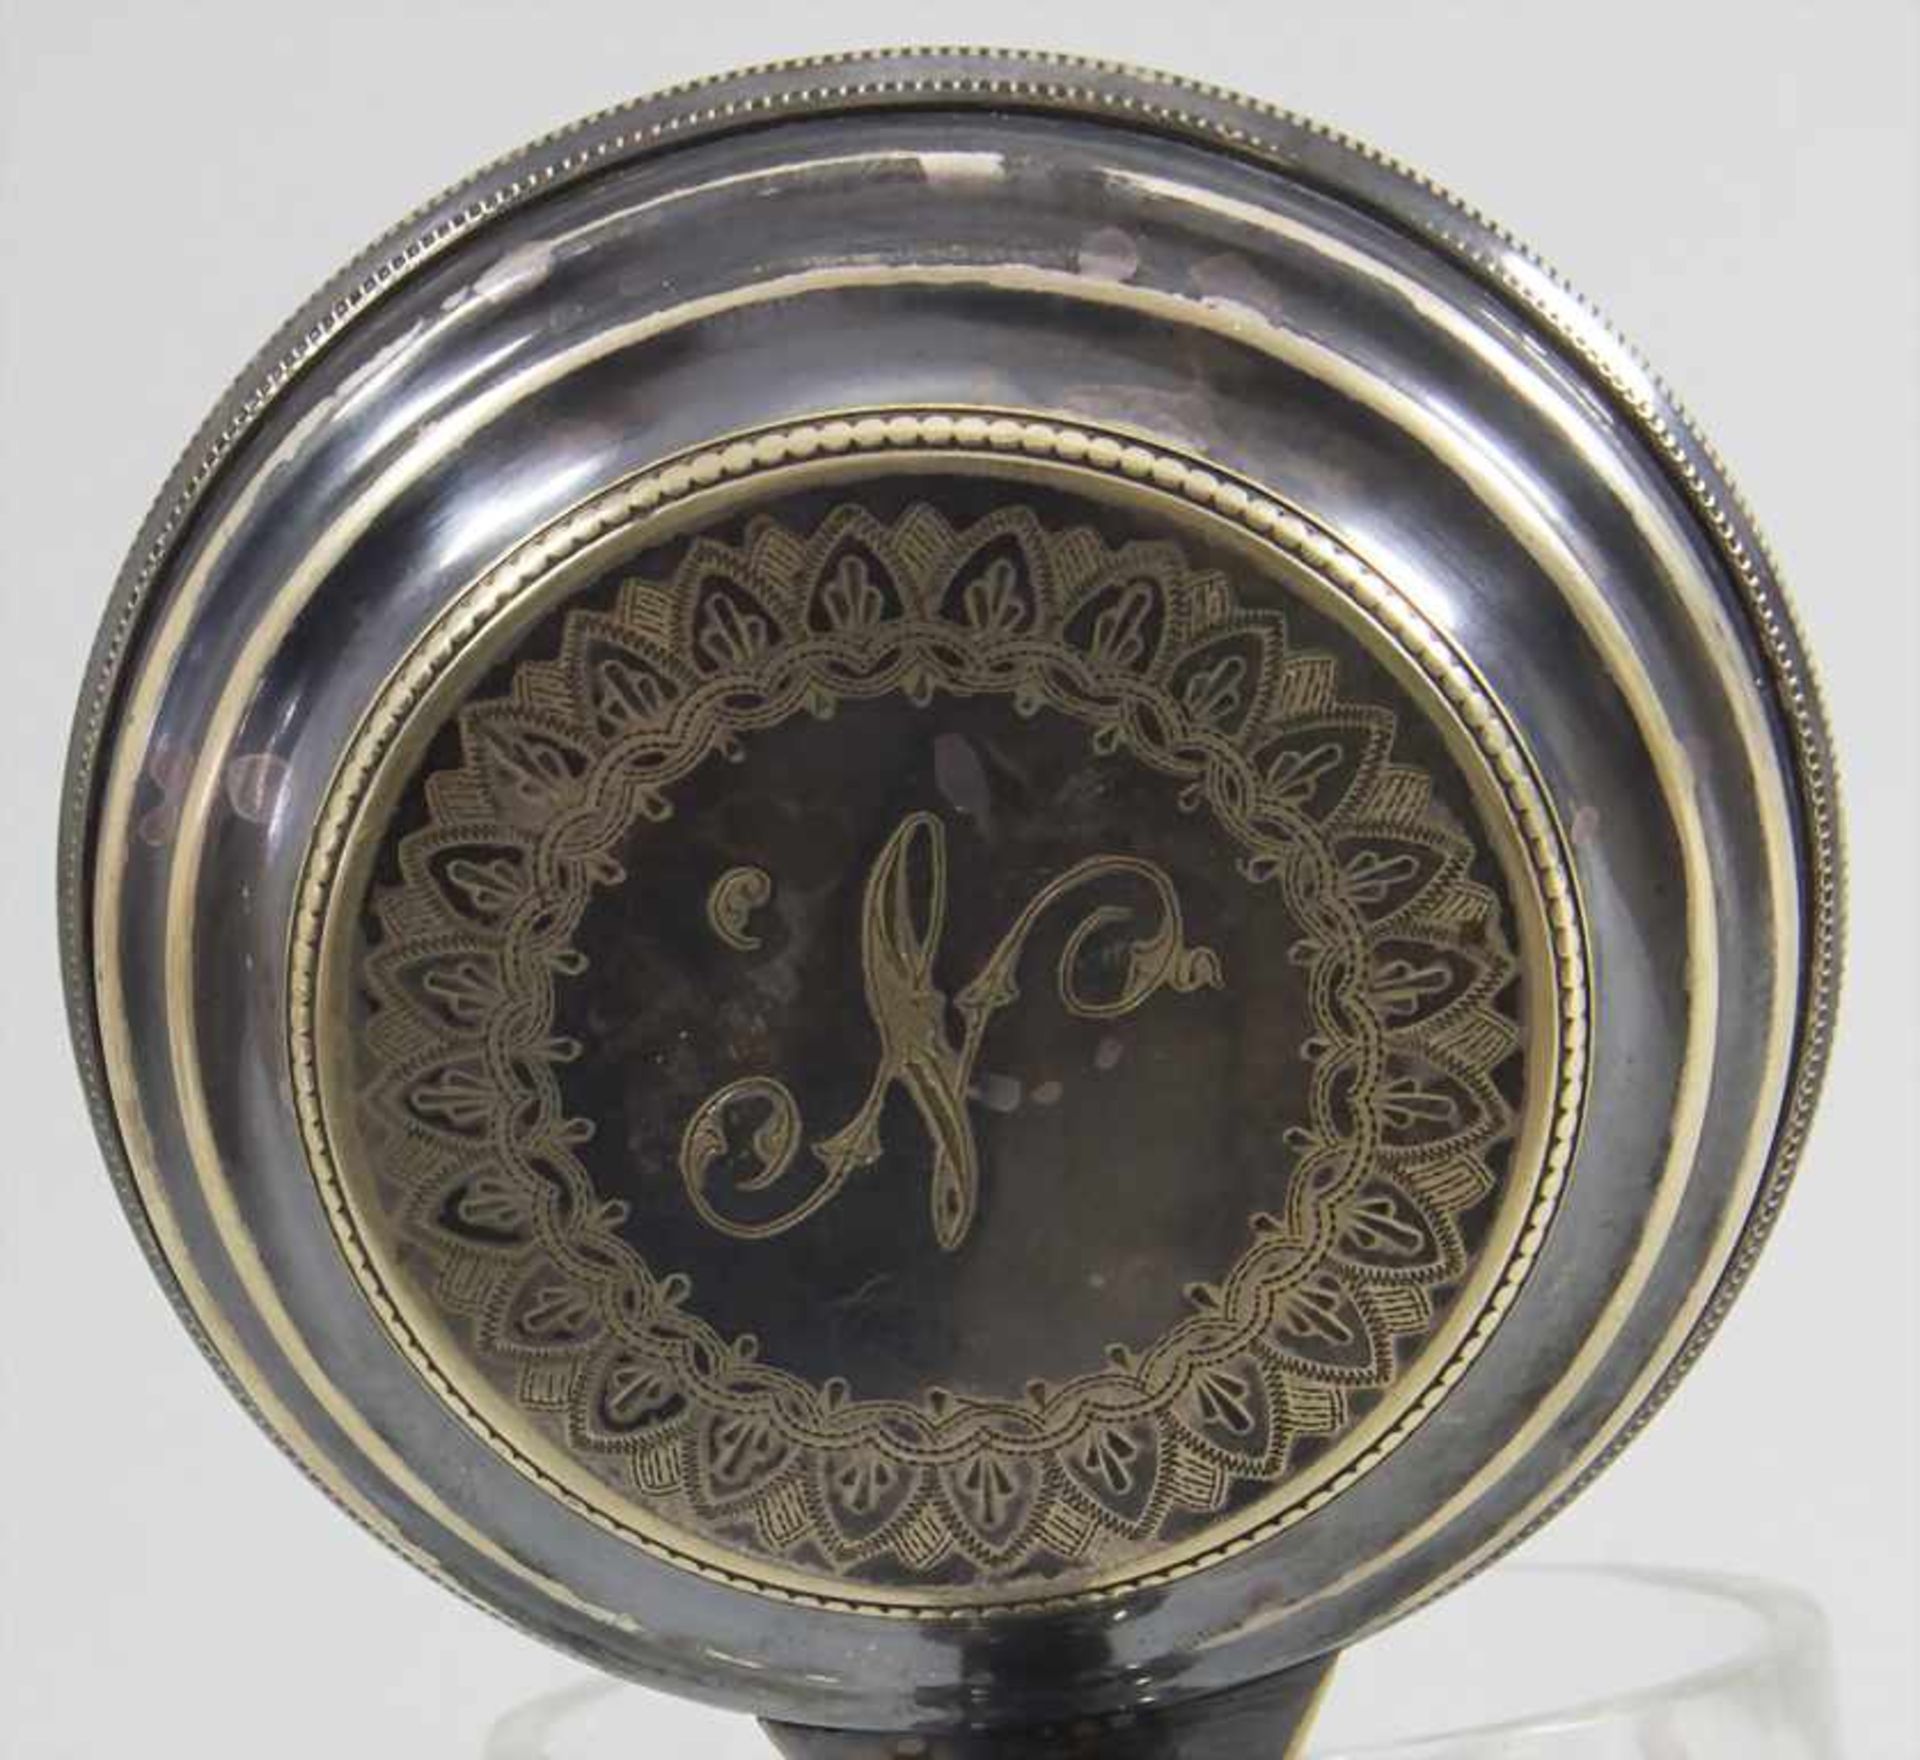 Bierkrug / A glass beer mug with plated lid - Image 4 of 5